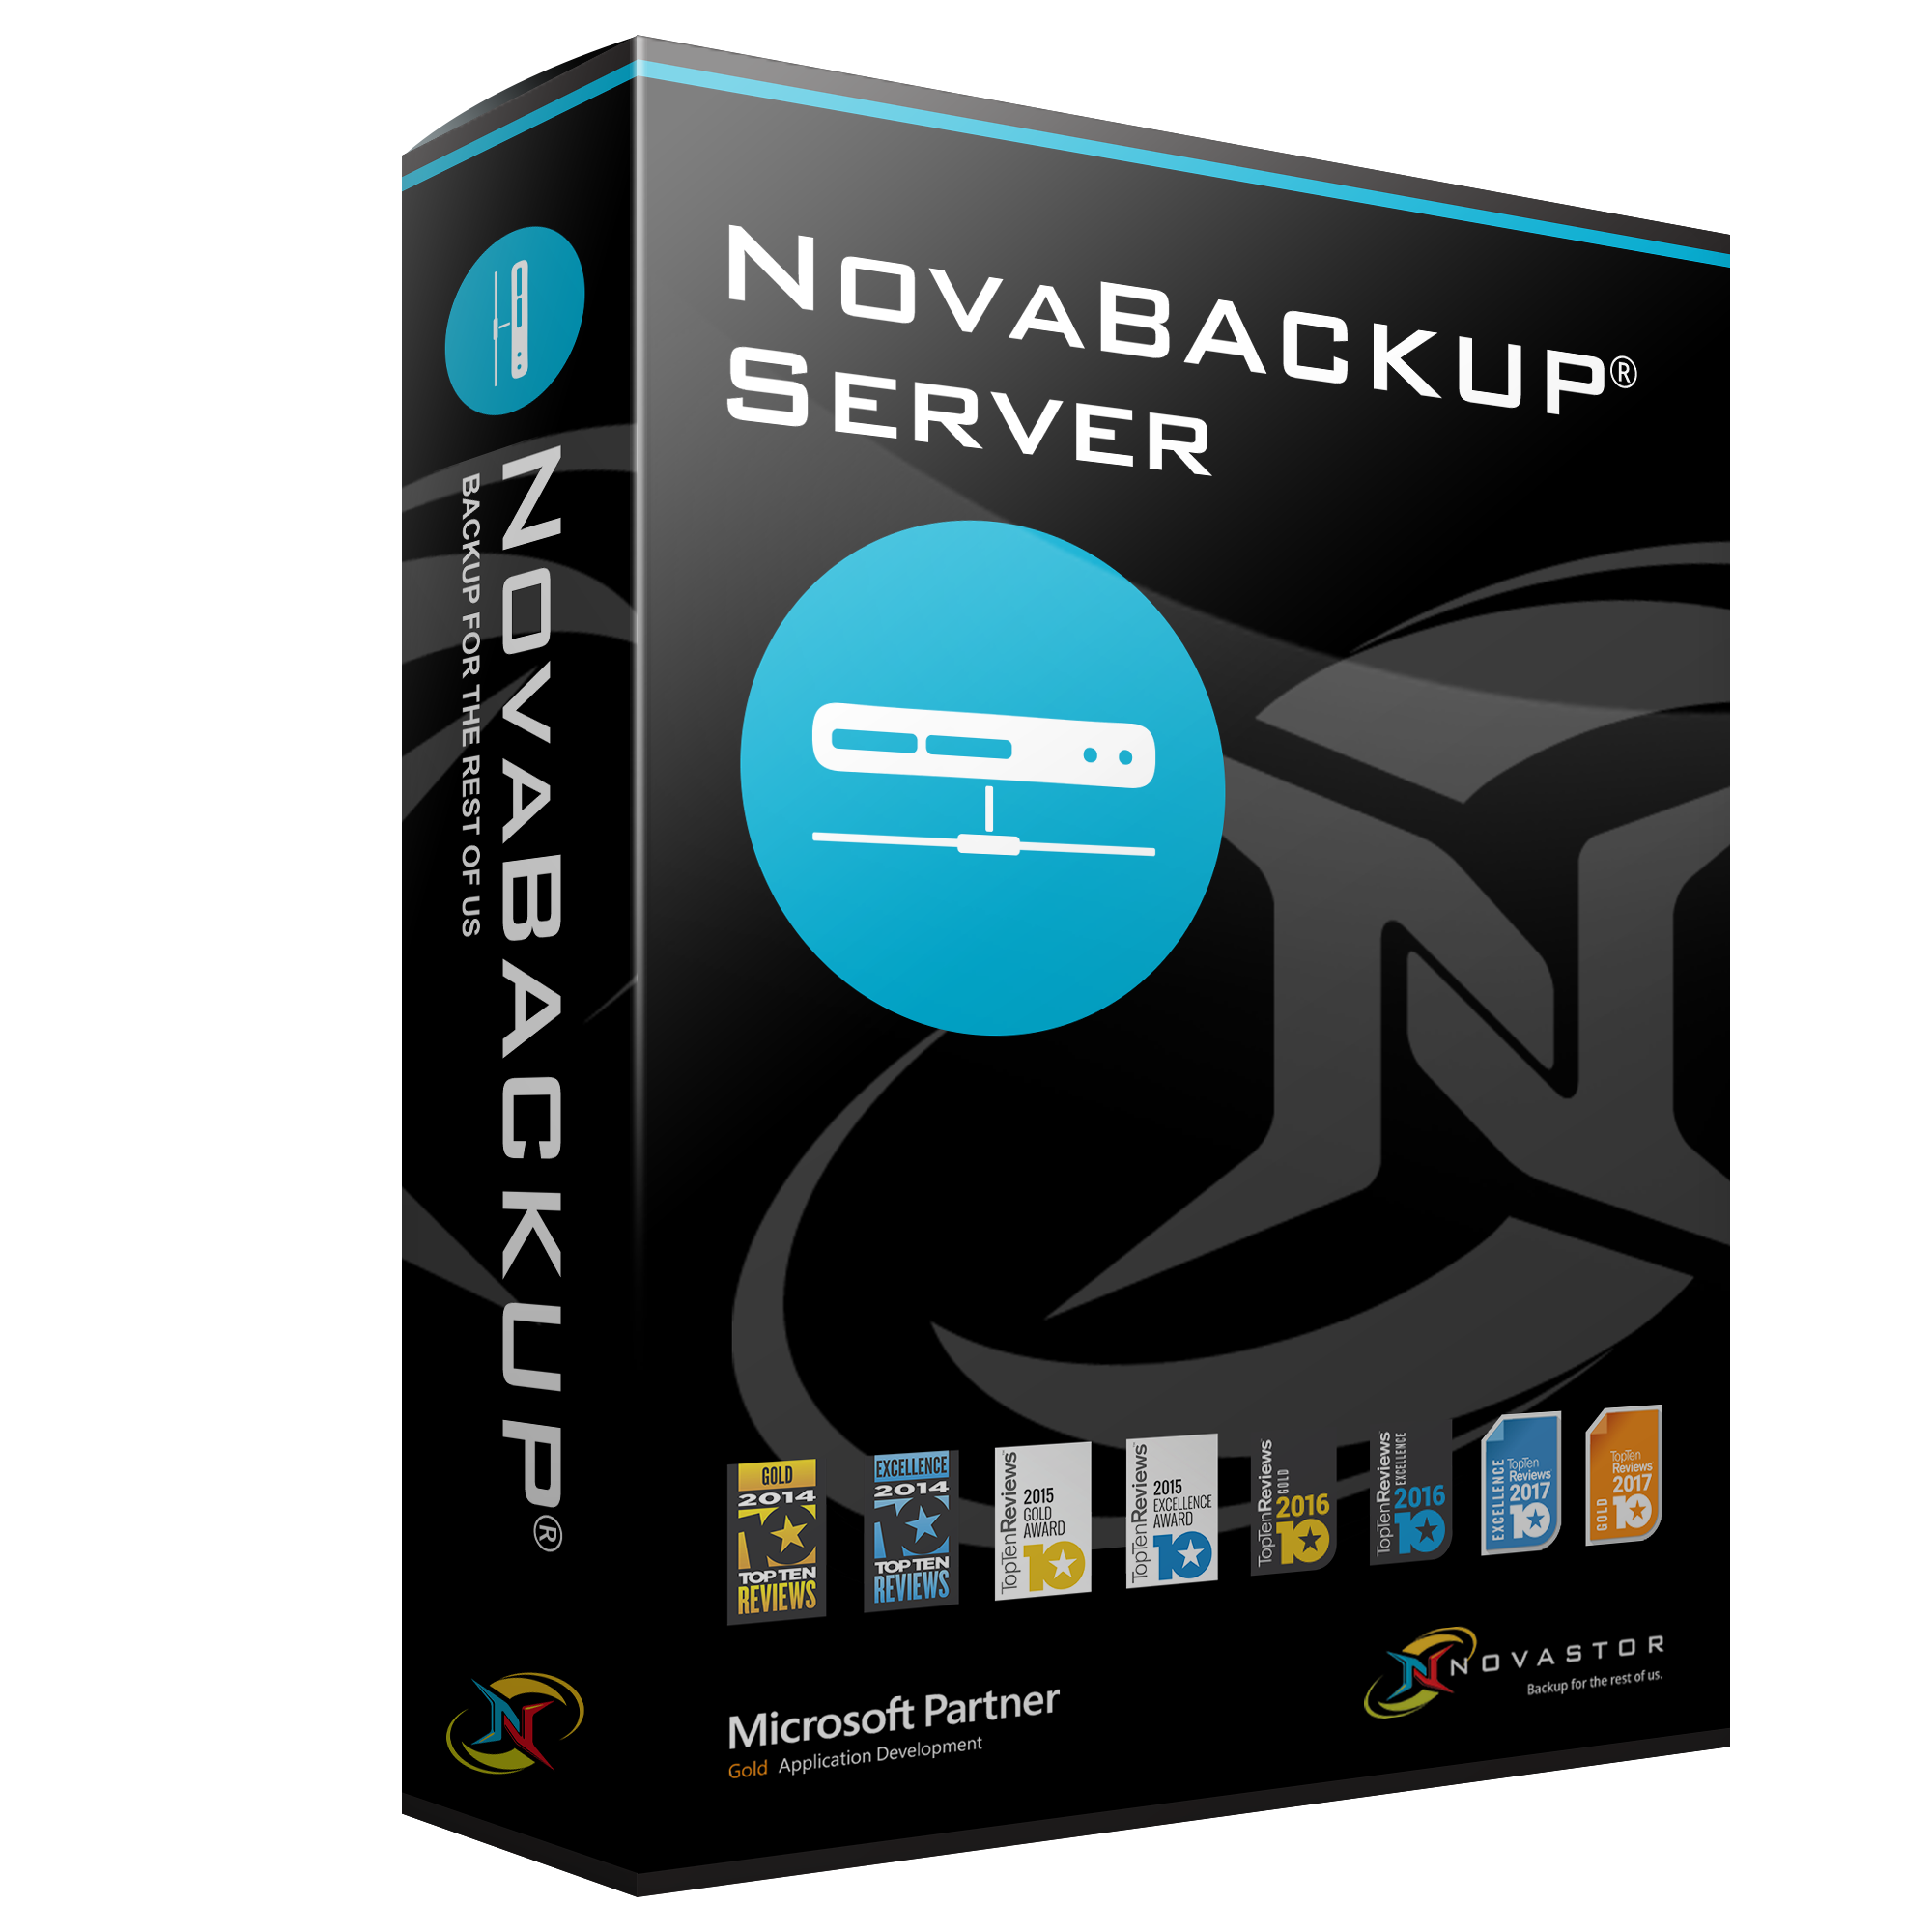 NovaBACKUP-box_Server_right